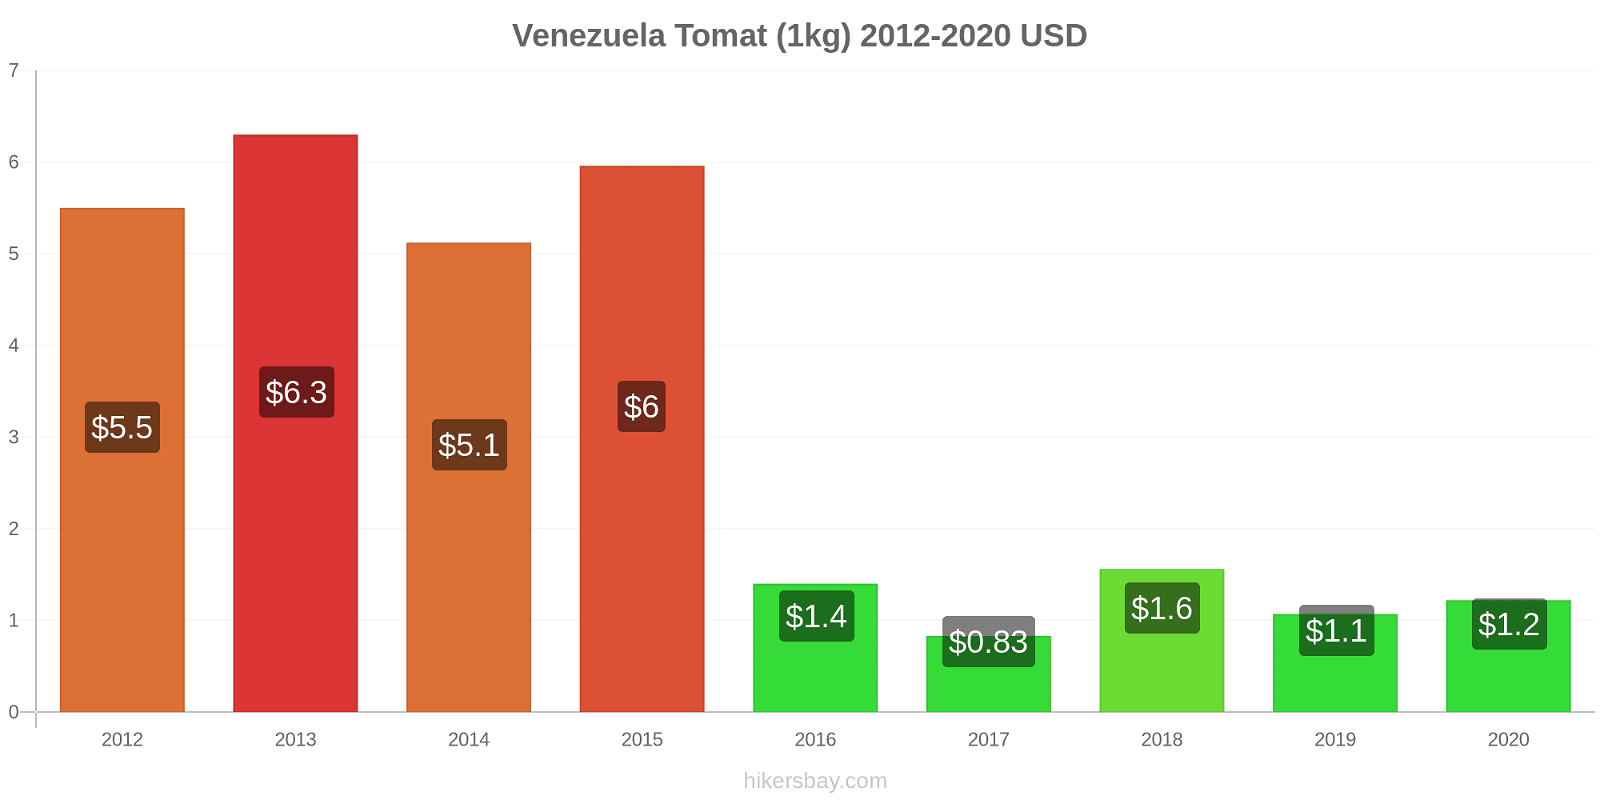 Venezuela perubahan harga Tomat (1kg) hikersbay.com